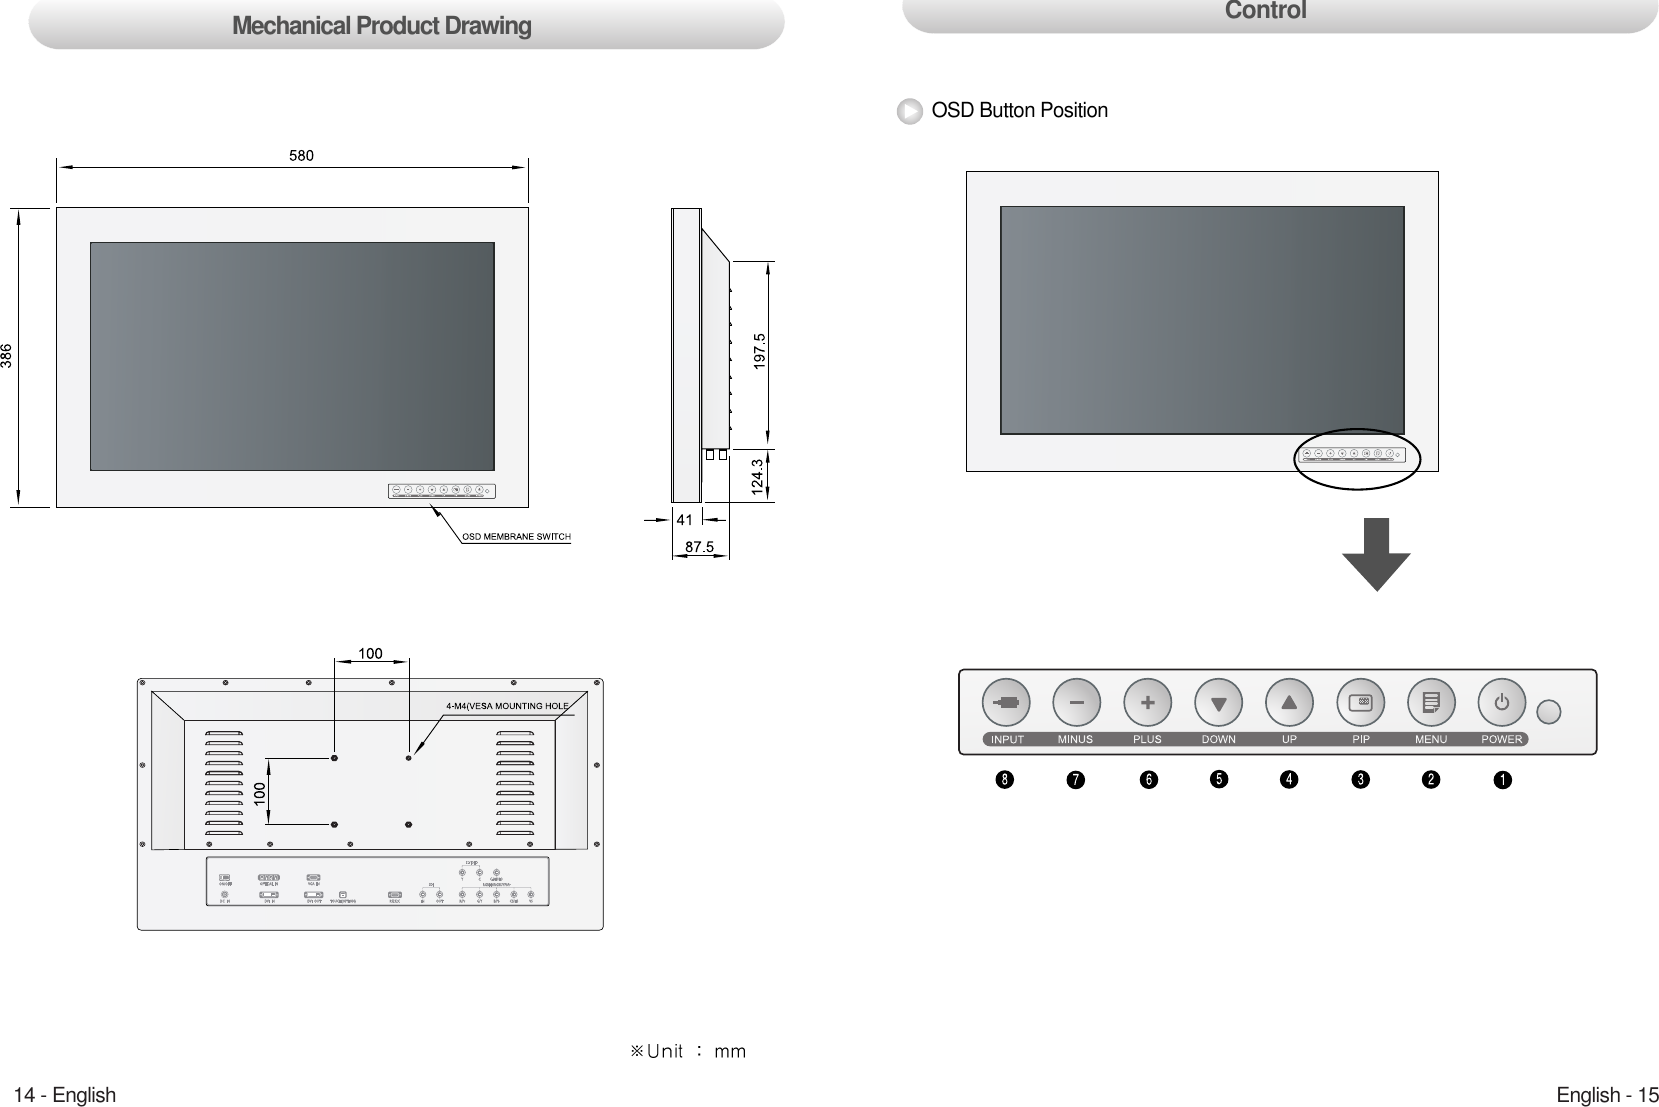 English - 1514 - EnglishOSD Button PositionControlMechanical Product Drawing